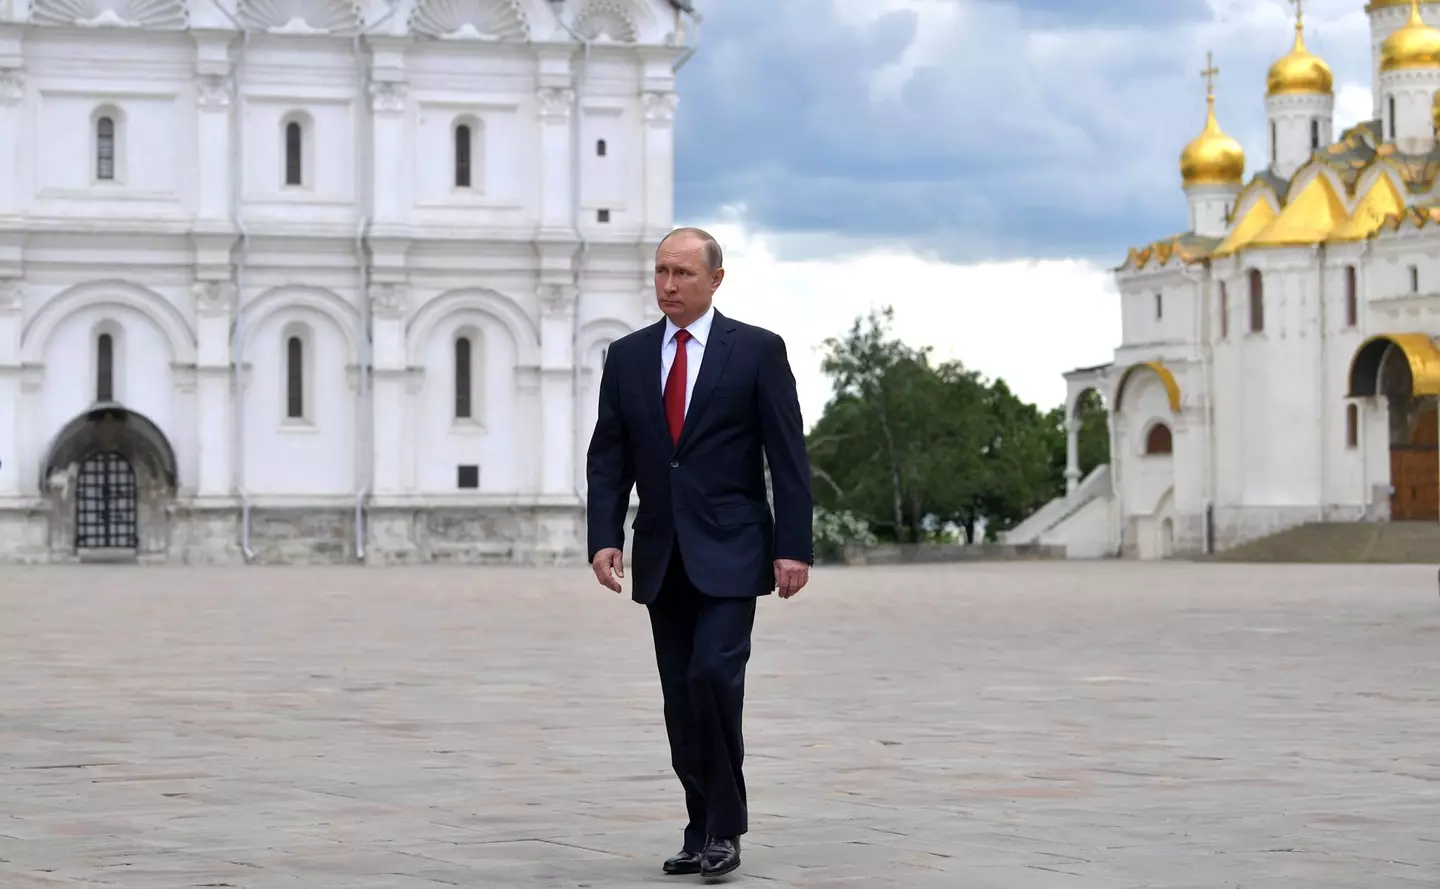 Putin keeps his right arm dead still when he walks.